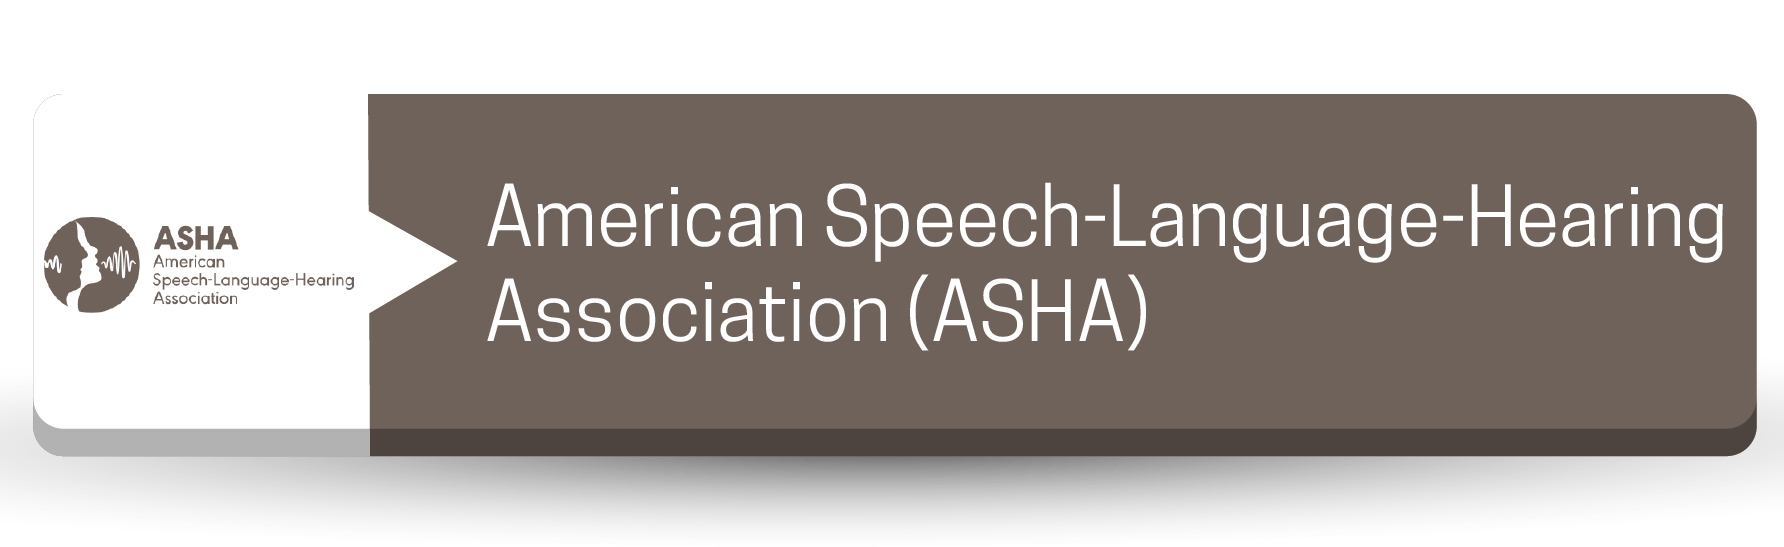 American Speech-Language-Hearing Association (ASHA) Button